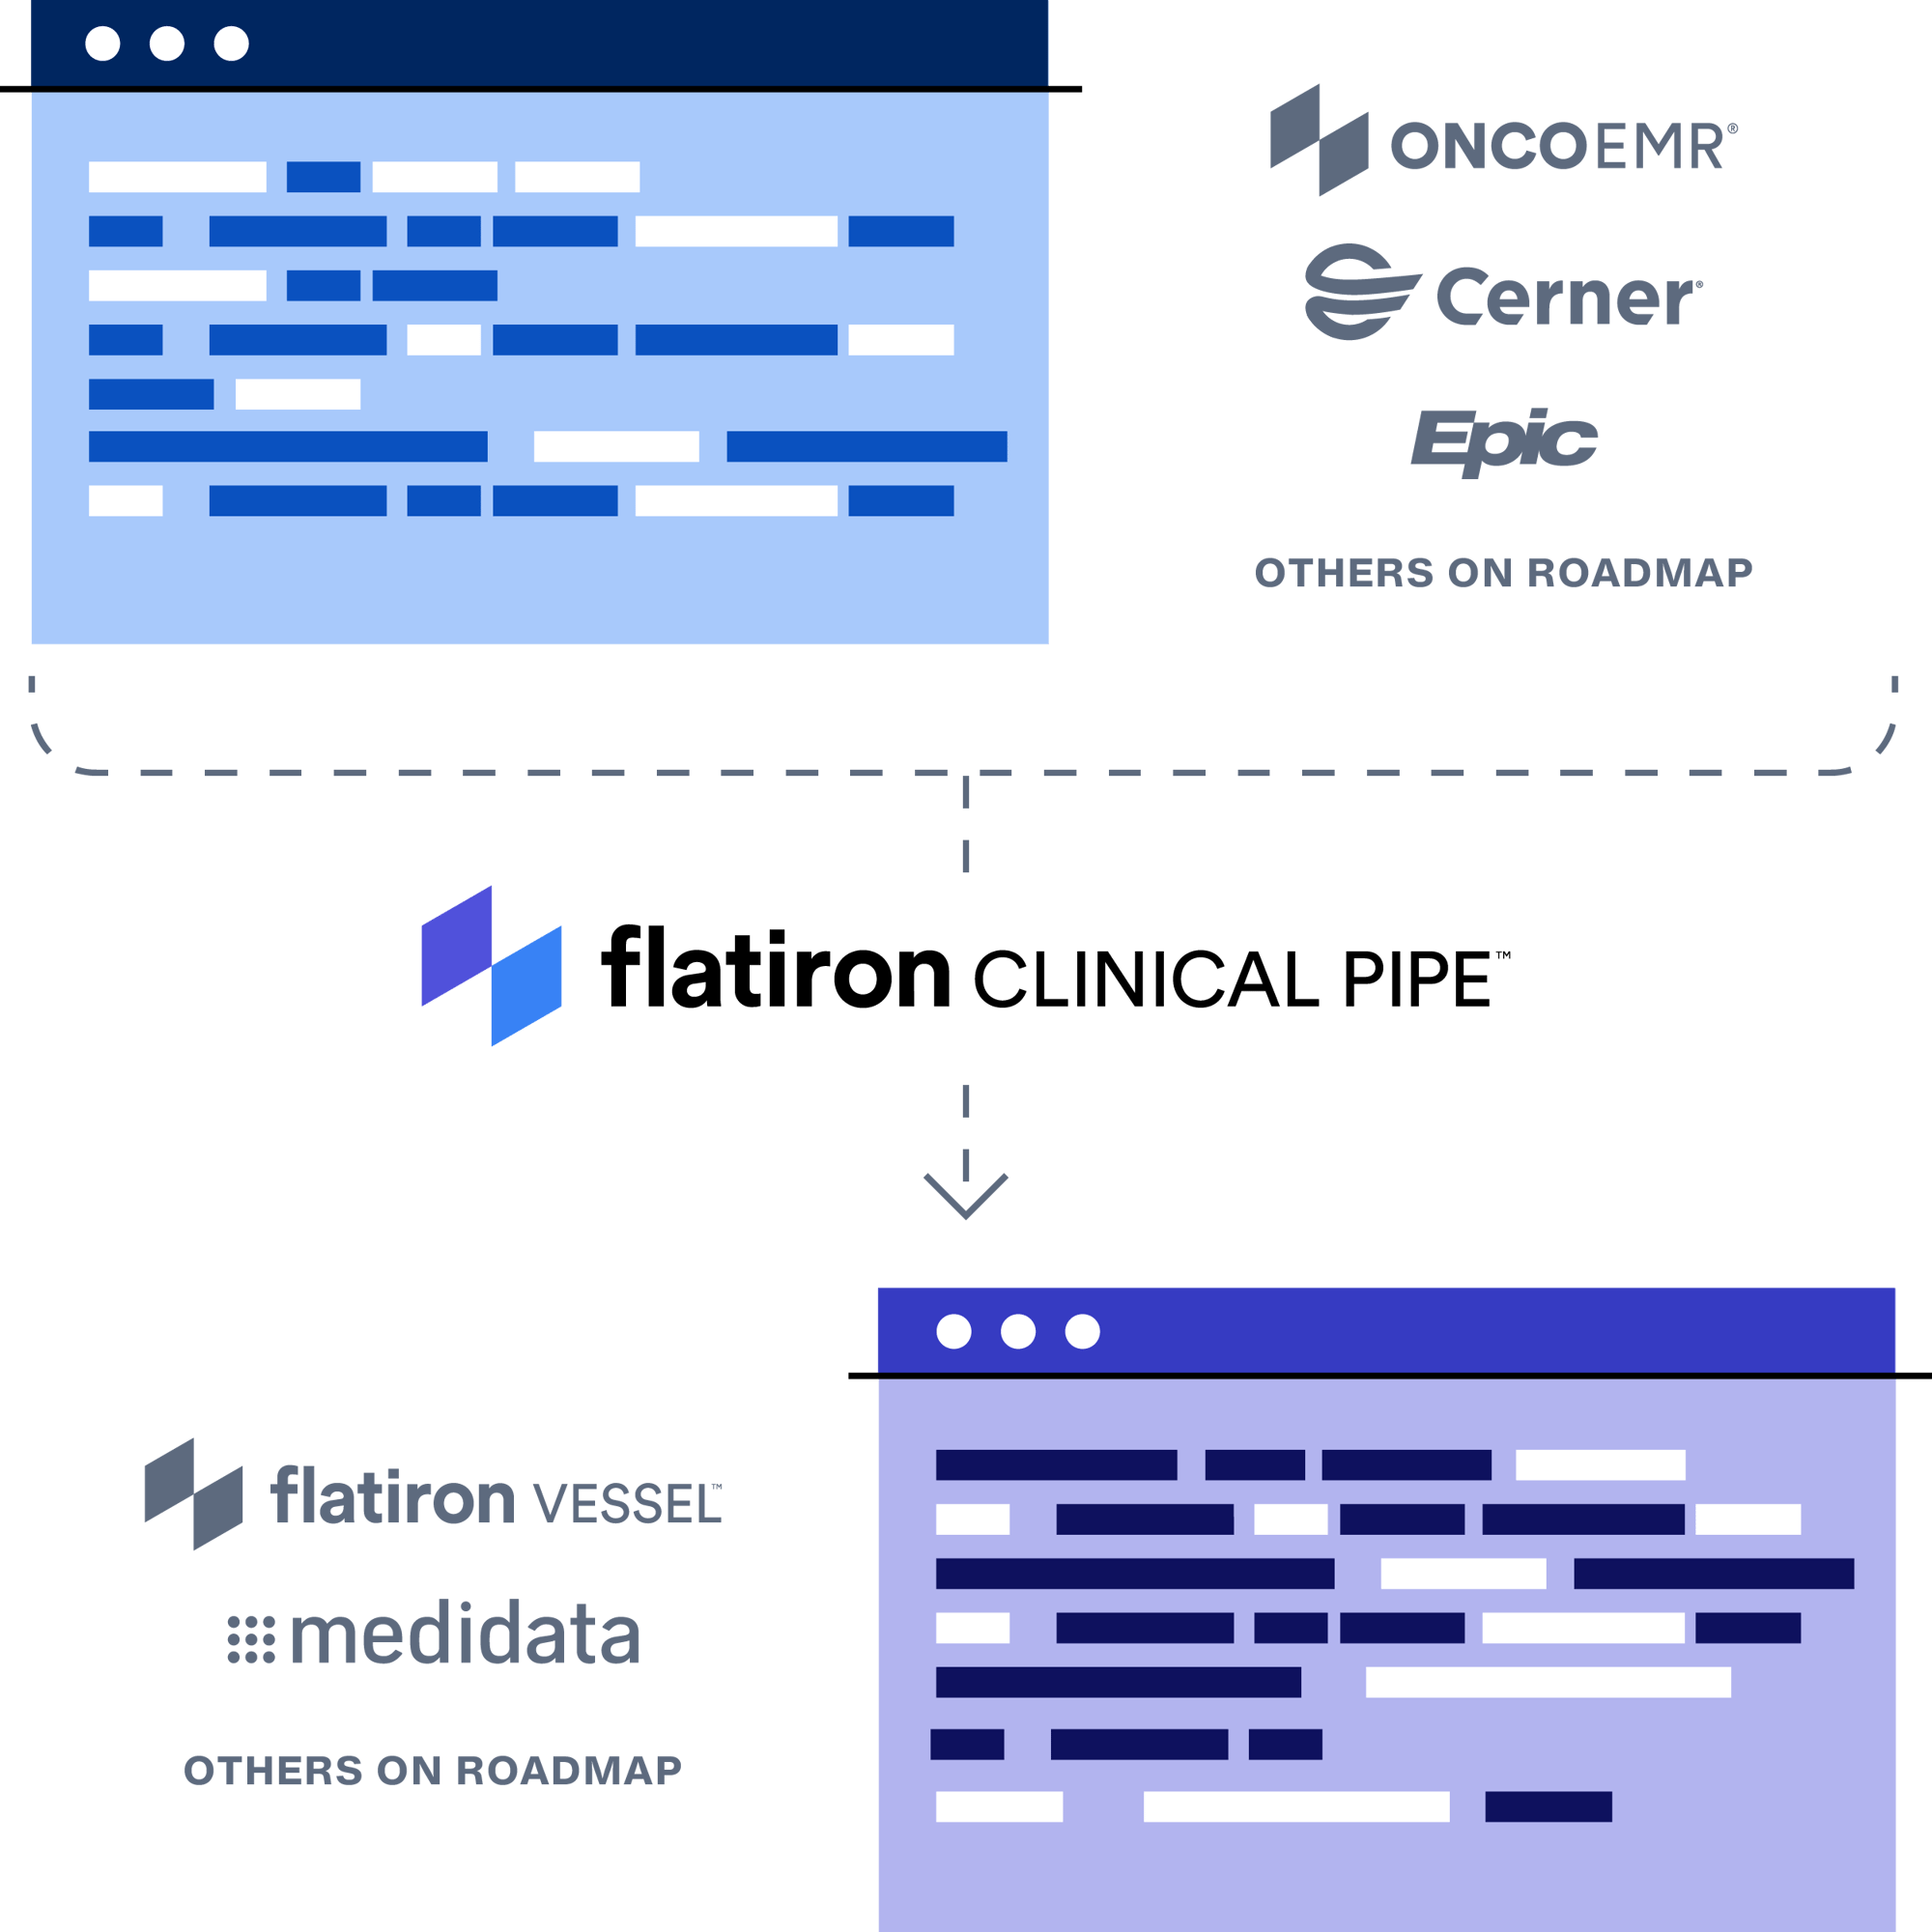 flatiron-clinical-pipe-diagram-1